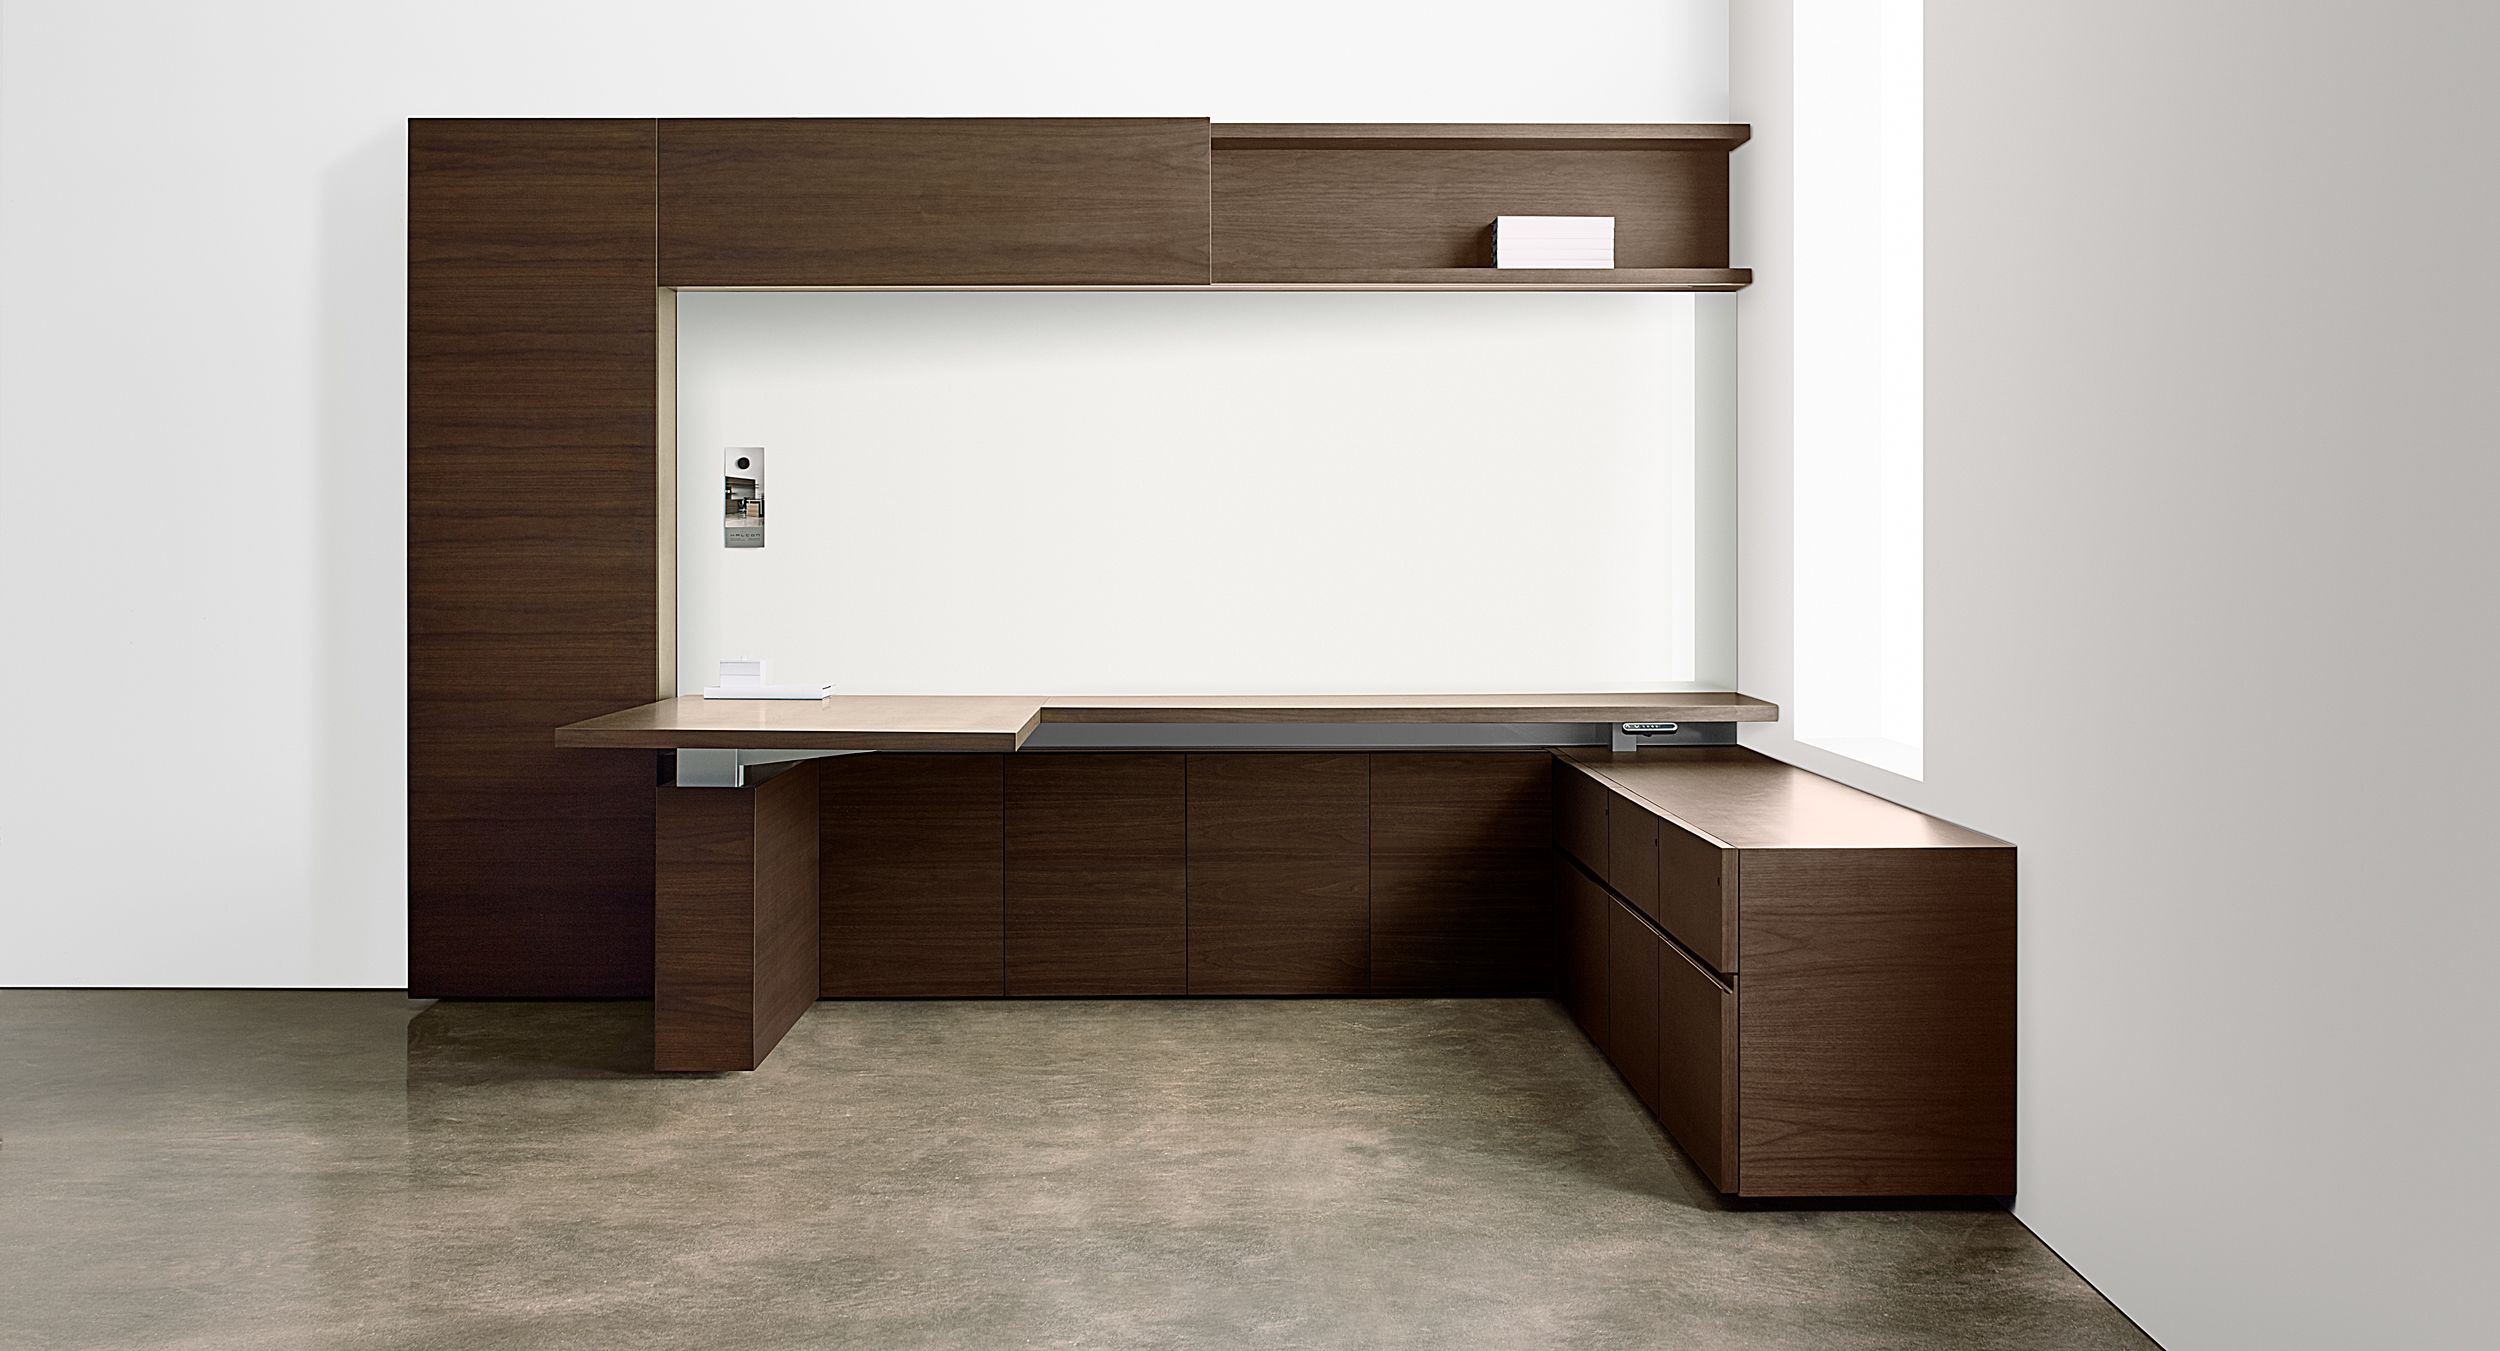 Adjustable-height desking seamlessly integrates into the timeless modern design.